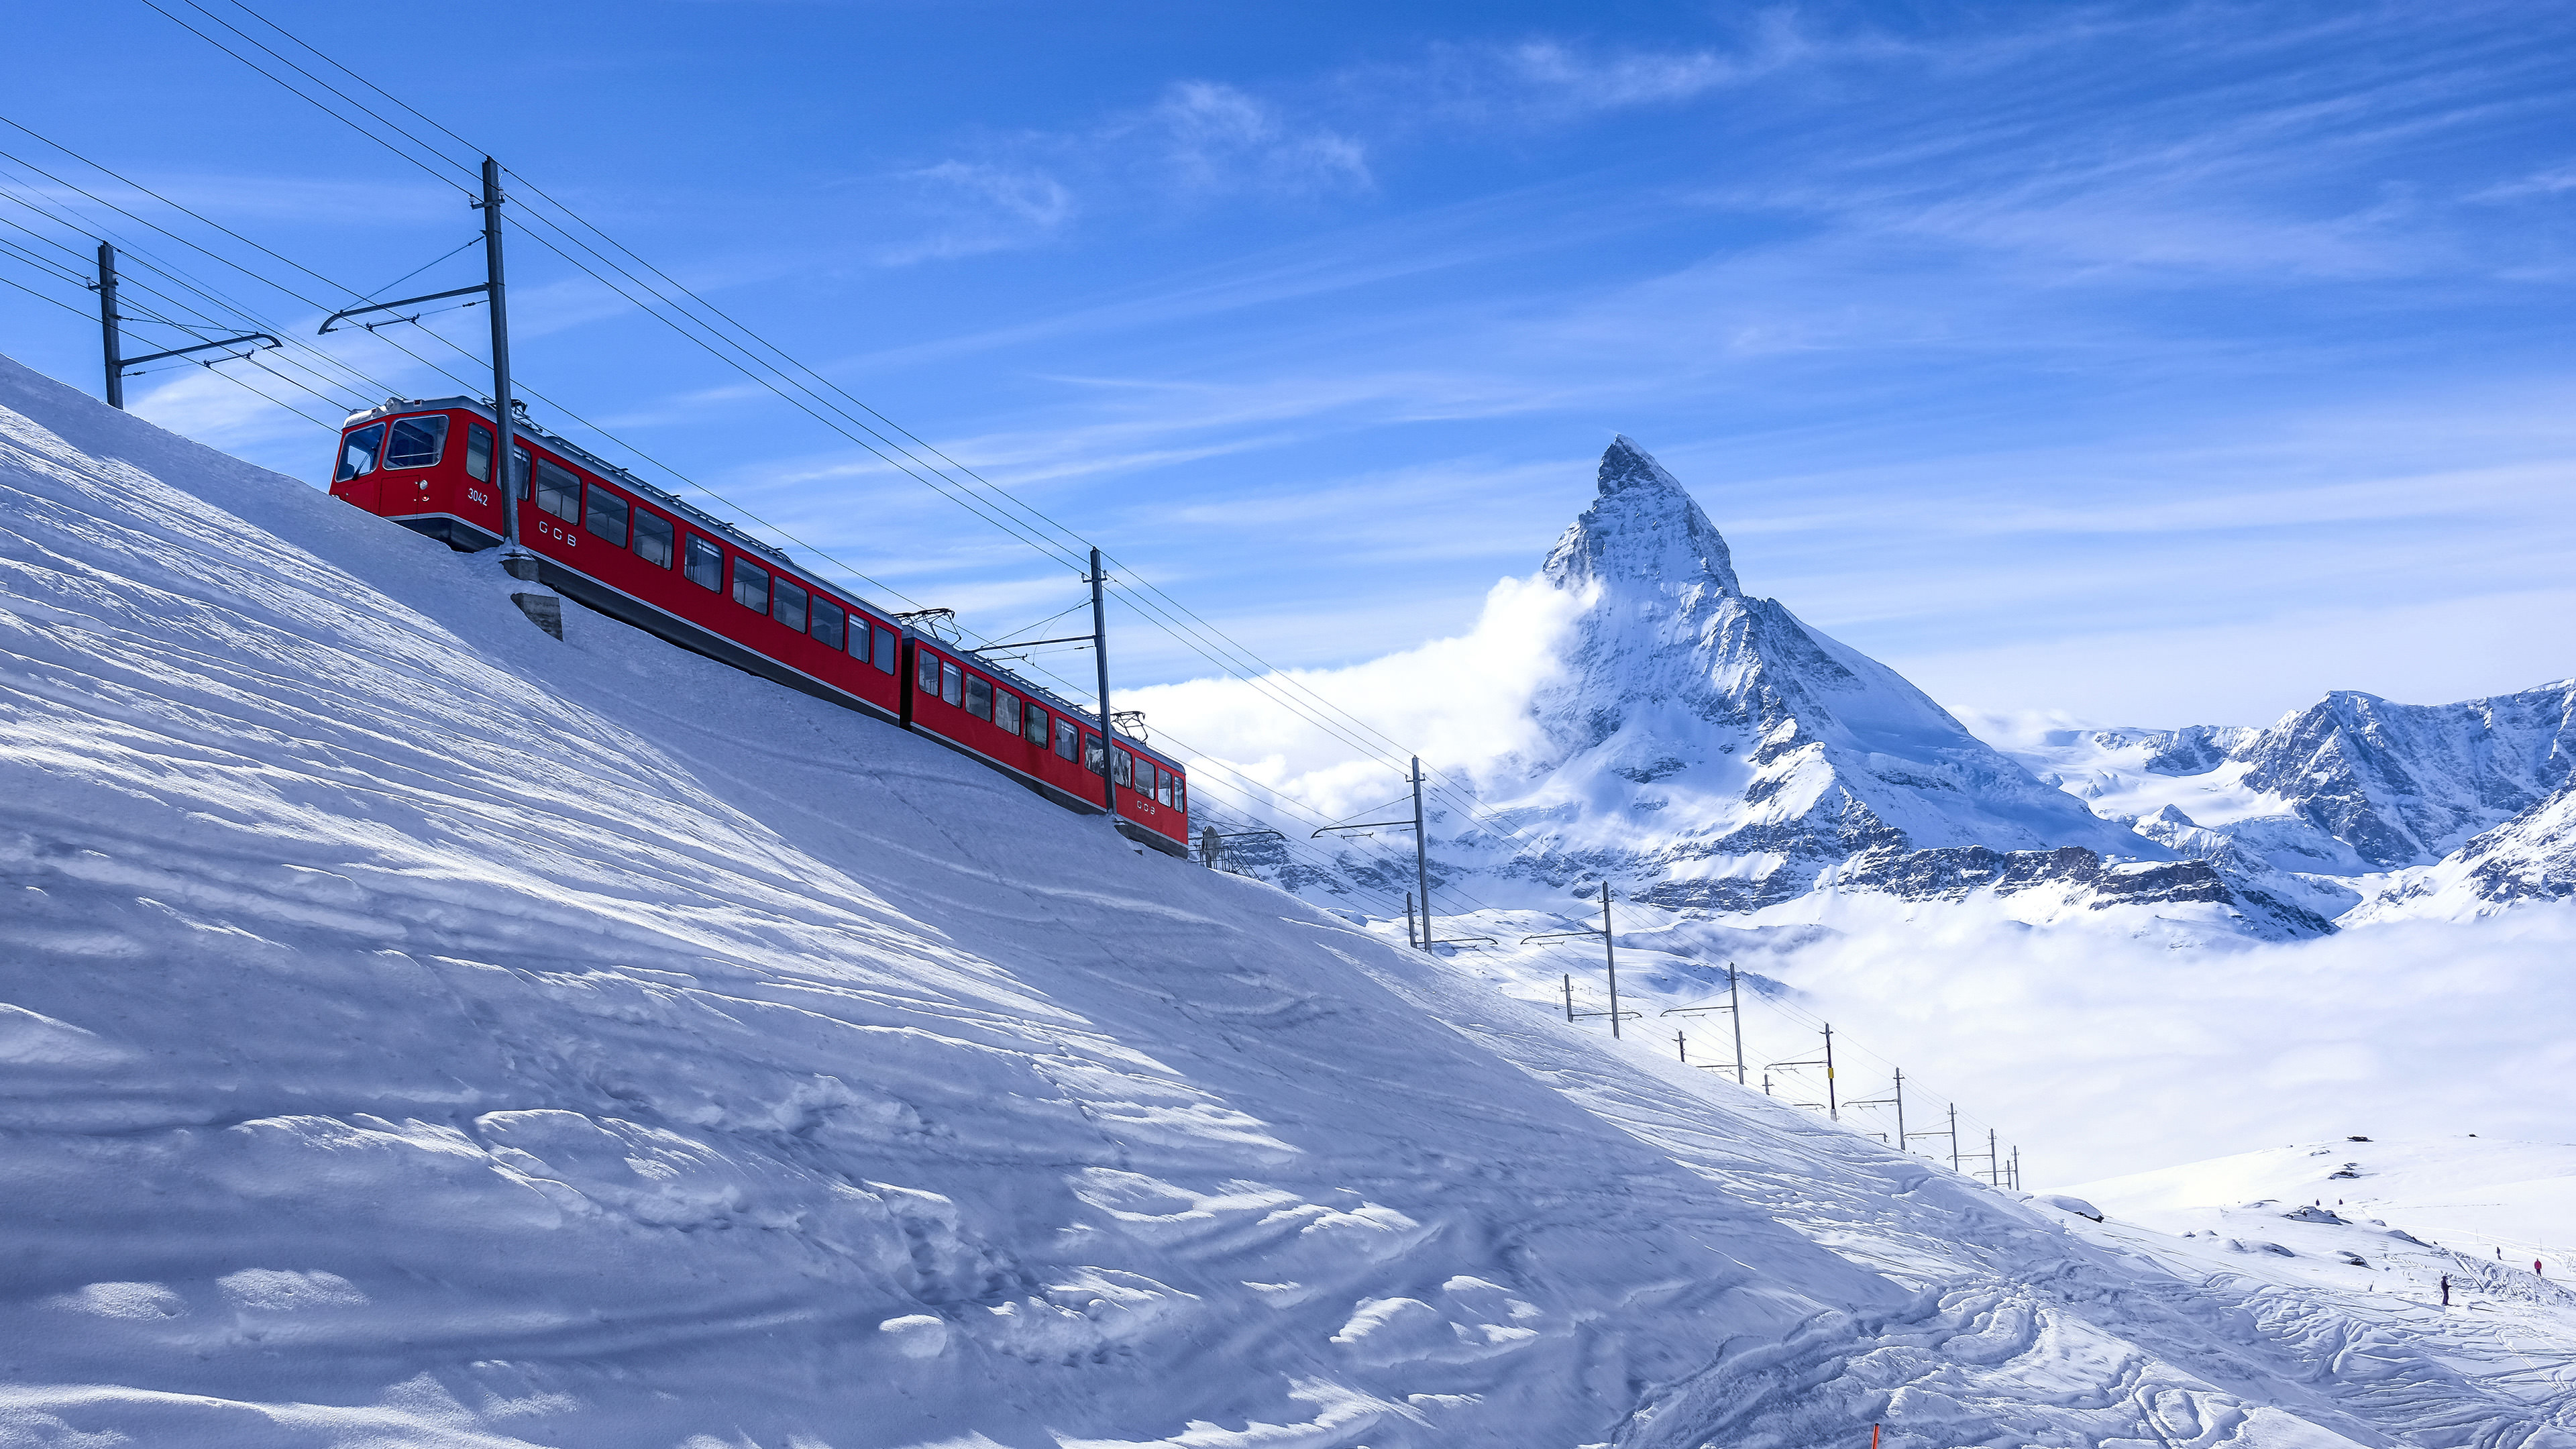 Zermatt Switzerland Alps Snow Train Mountains Matterhorn Landscape Clouds Winter Nature 3840x2160